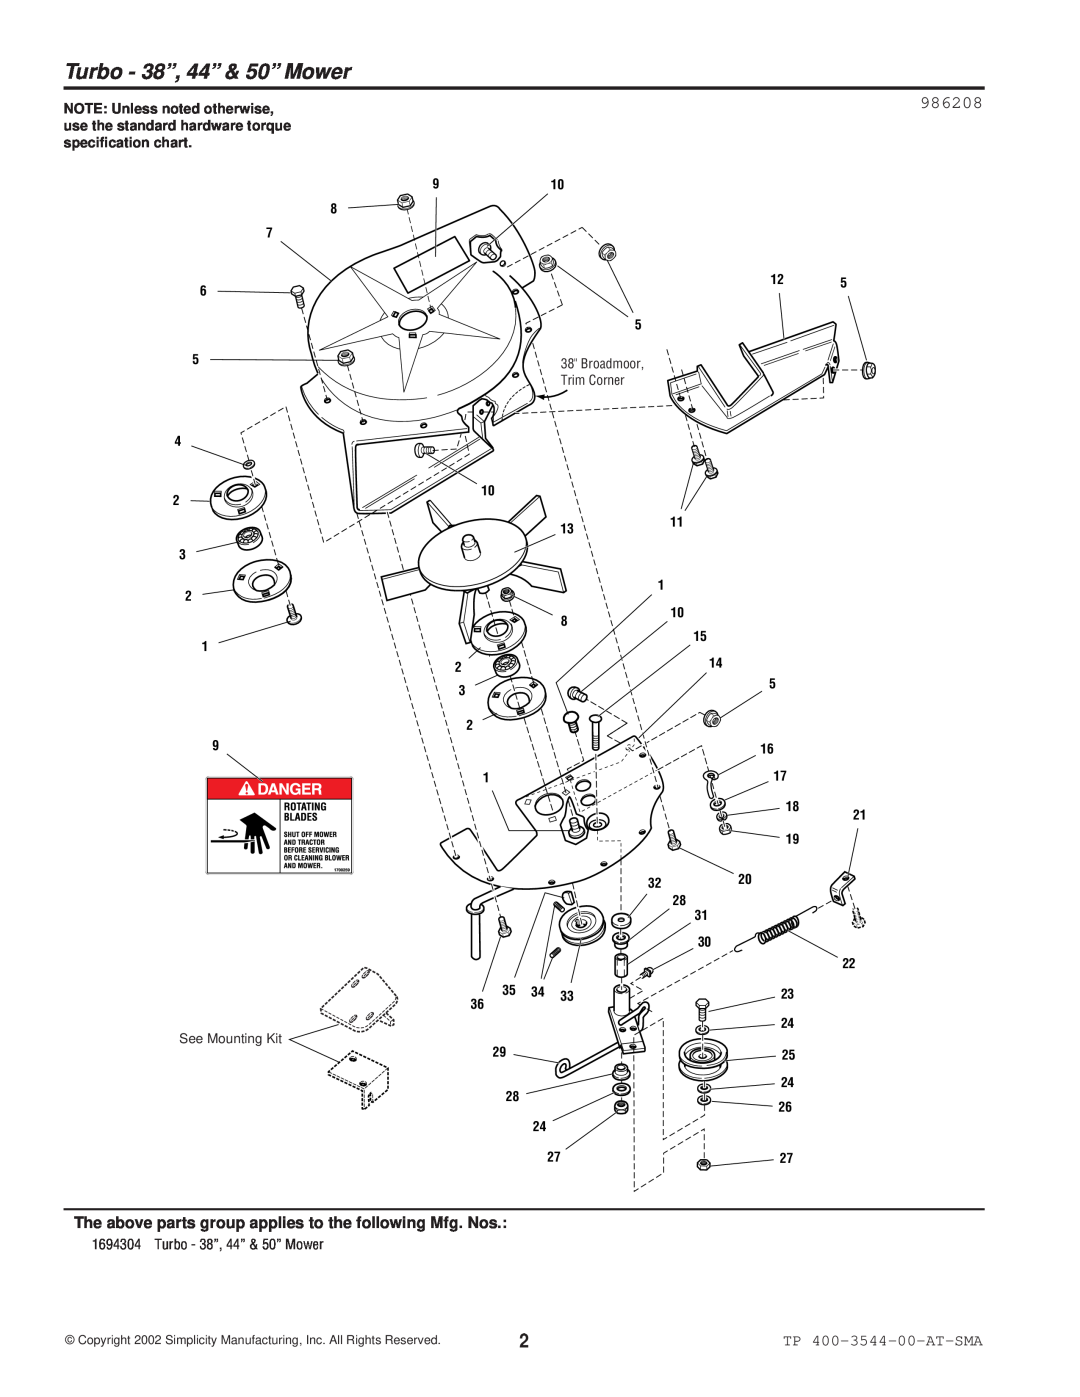 Snapper Turbo - 38”, 44” & 50” Mower, 986208, TP 400-3544-00-AT-SMA, 2 3, Broadmoor Trim Corner, 14 5, See Mounting Kit 